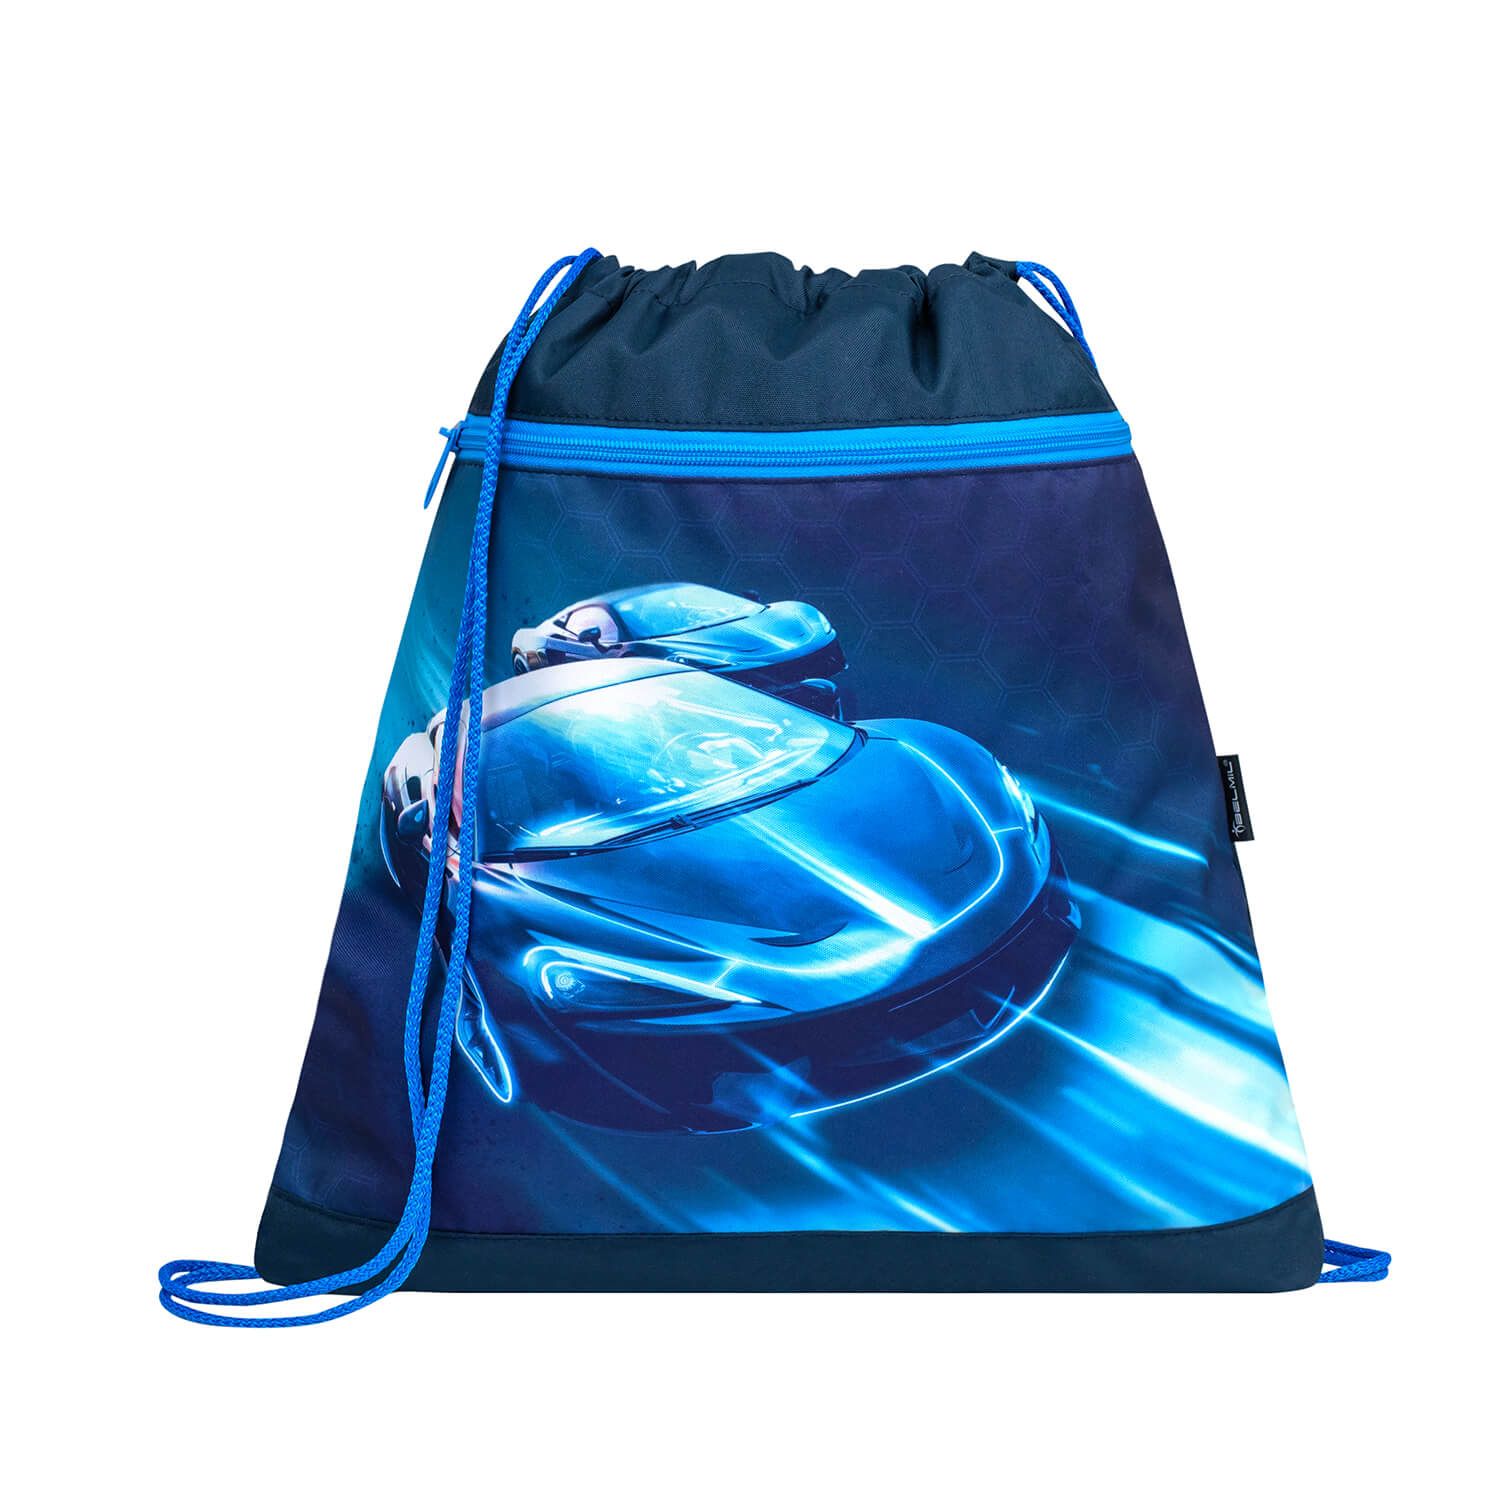 Compact Racing Blue Neon schoolbag set 4 pcs